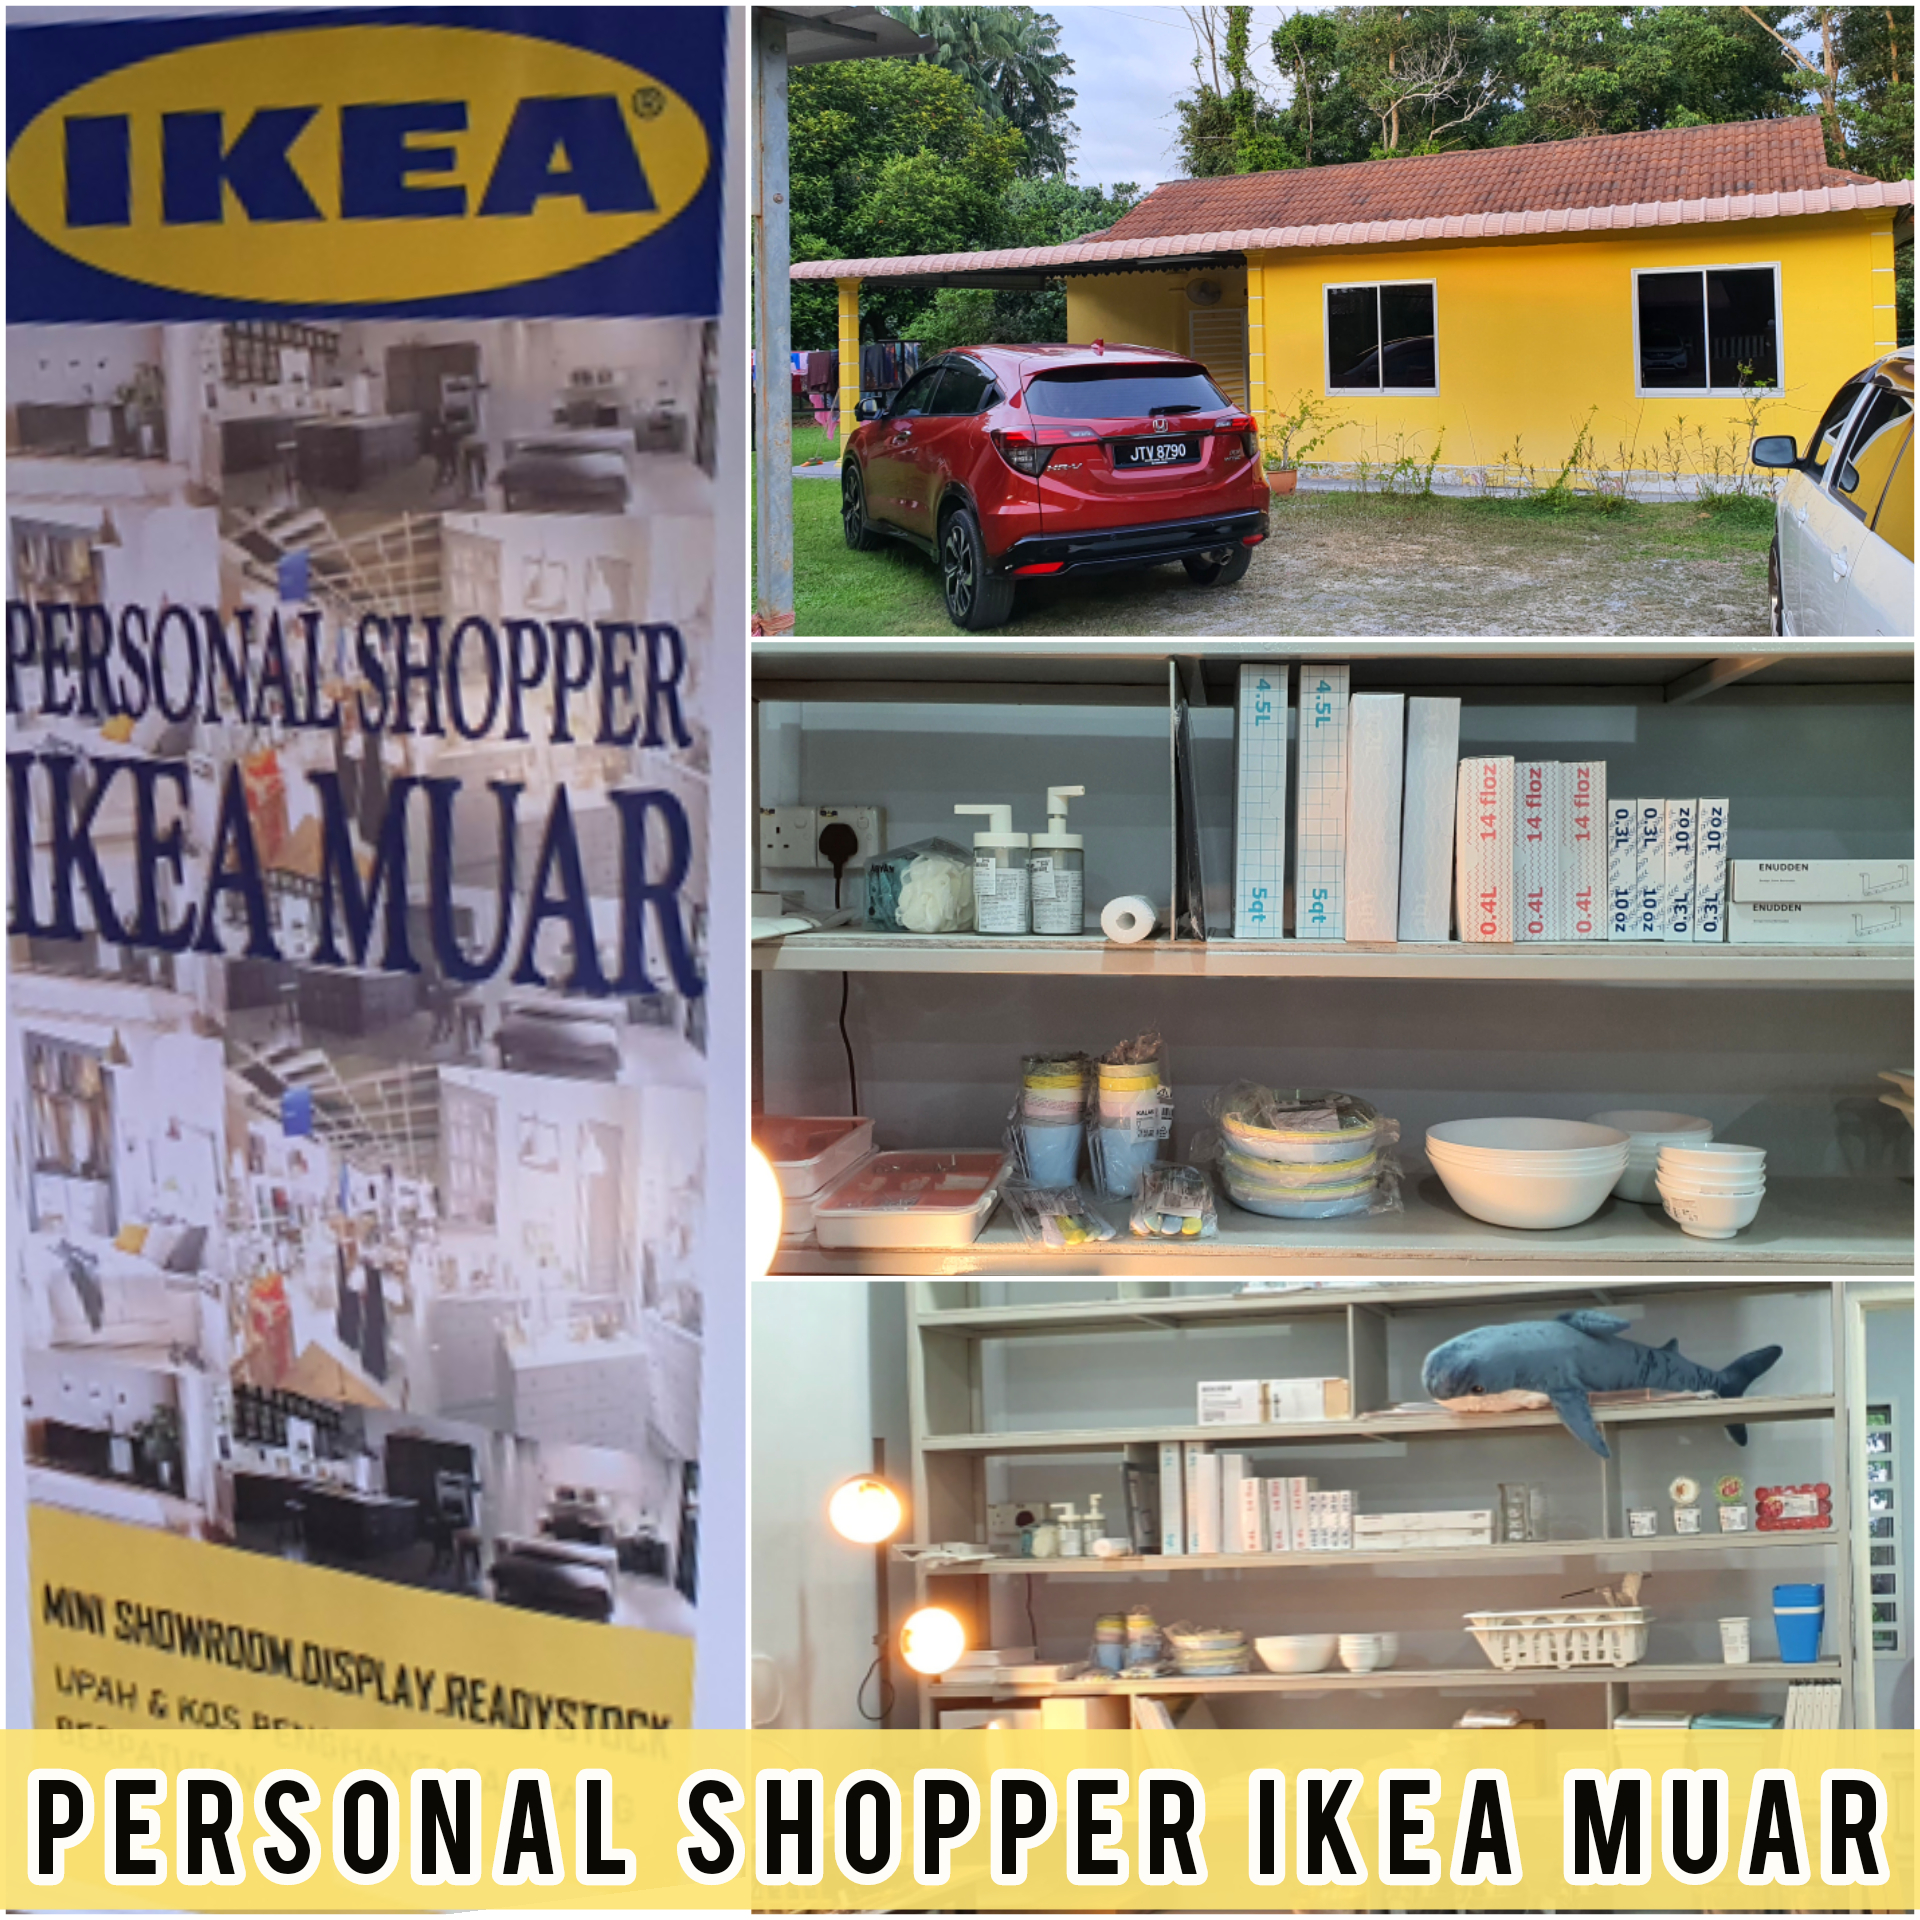 Personal shopper - IKEA